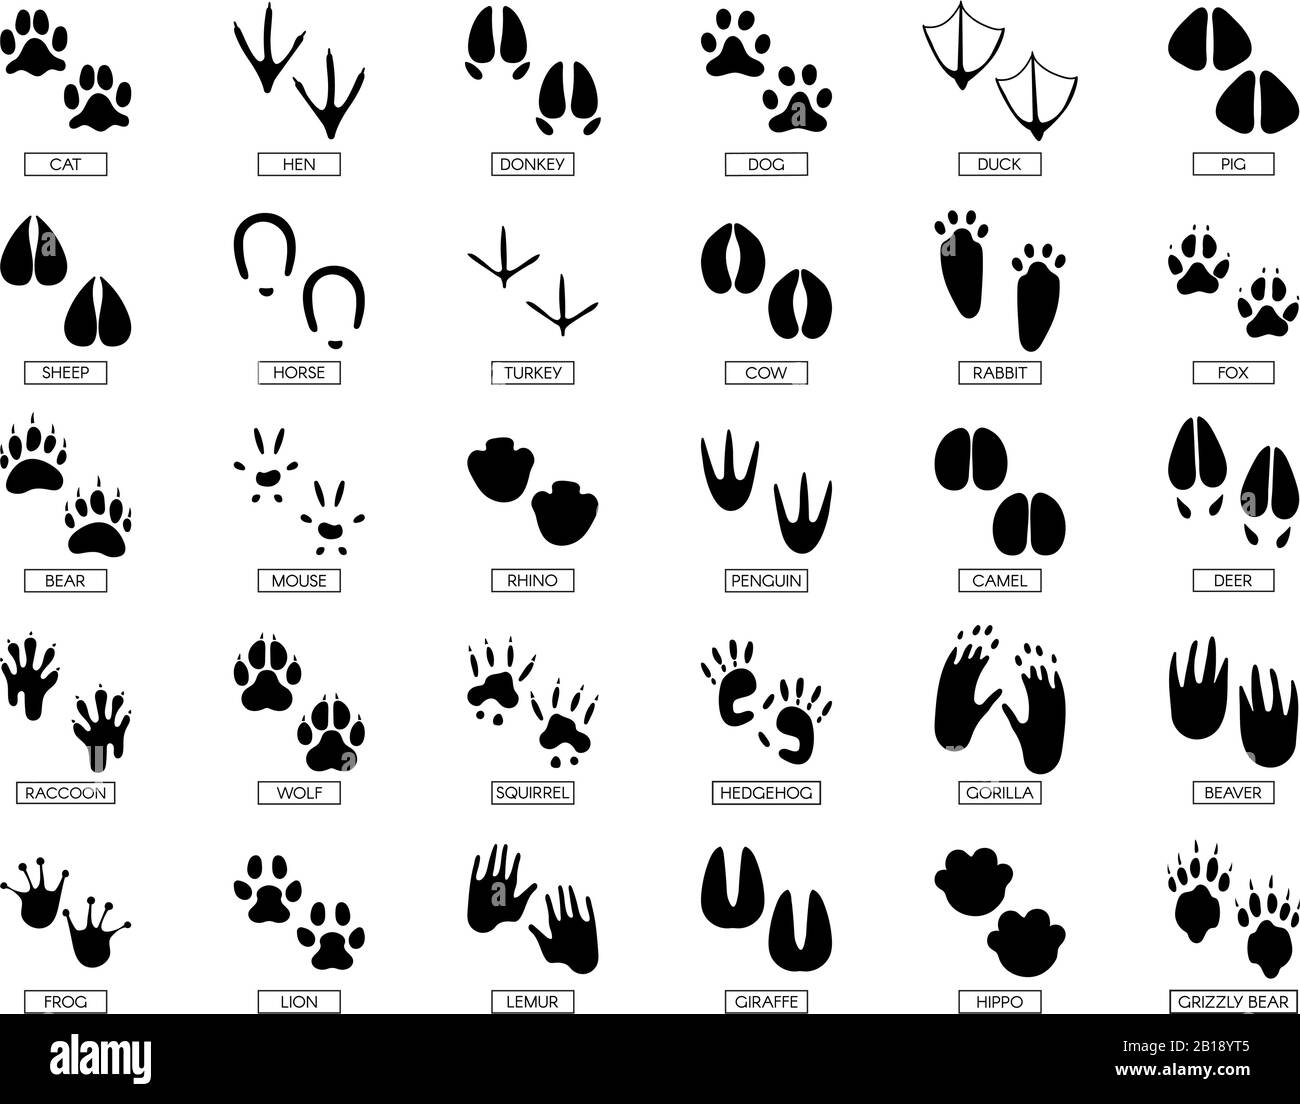 Animals footprints. Animal feet silhouette, frog footprint and pets foots silhouettes prints vector illustration set Stock Vector